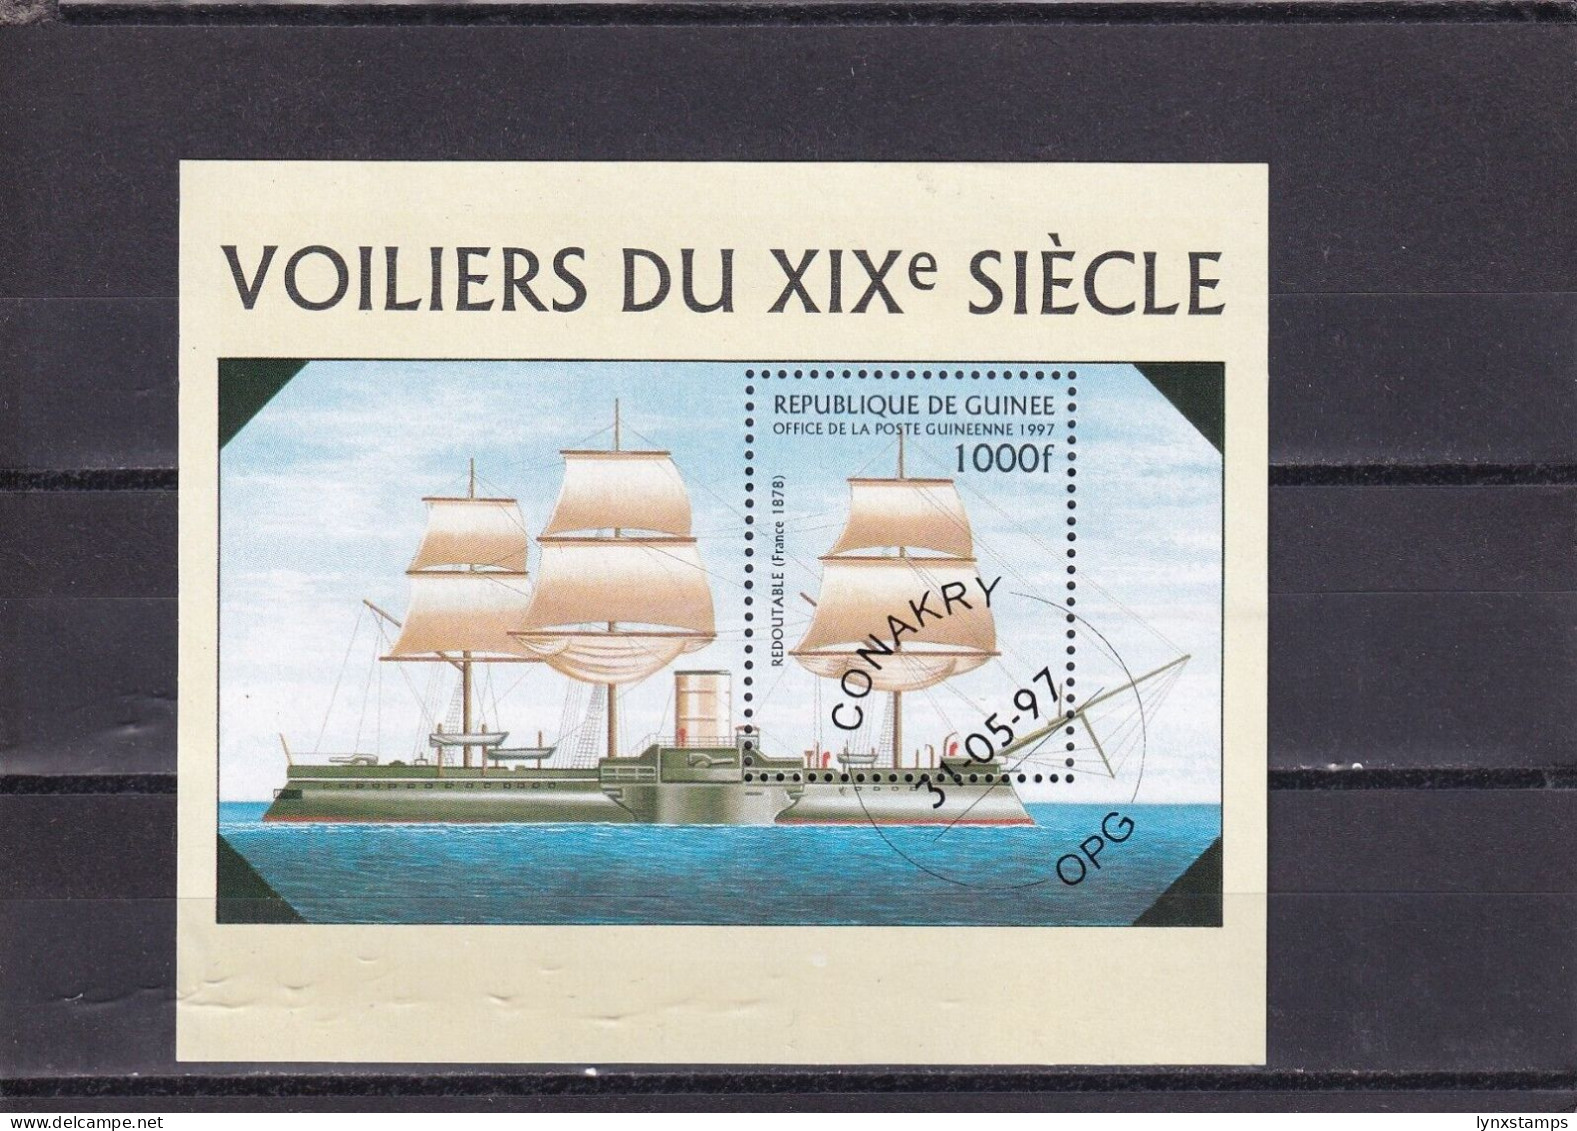 SA03 Guinea 1997 The 19th Century Warships Used Minisheet - Ships